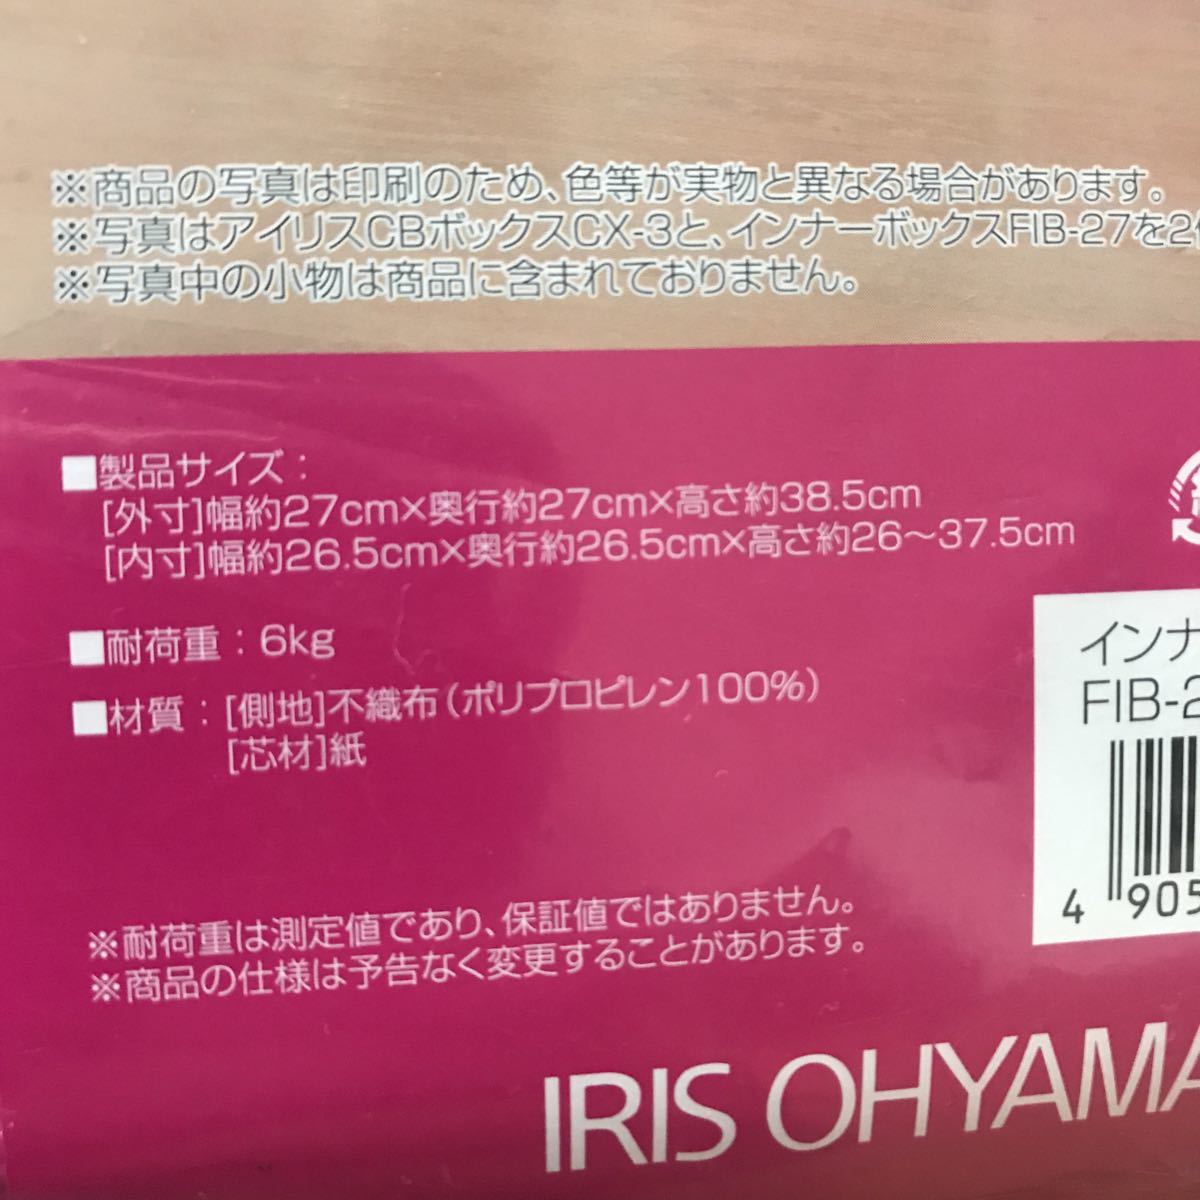 a29 新品 未使用品 アイリスオーヤマ IRISOHYAMA FIB-27 ピンク CBボックス専用インナーボックス テーブルクロス 収納ボックス セット_画像6